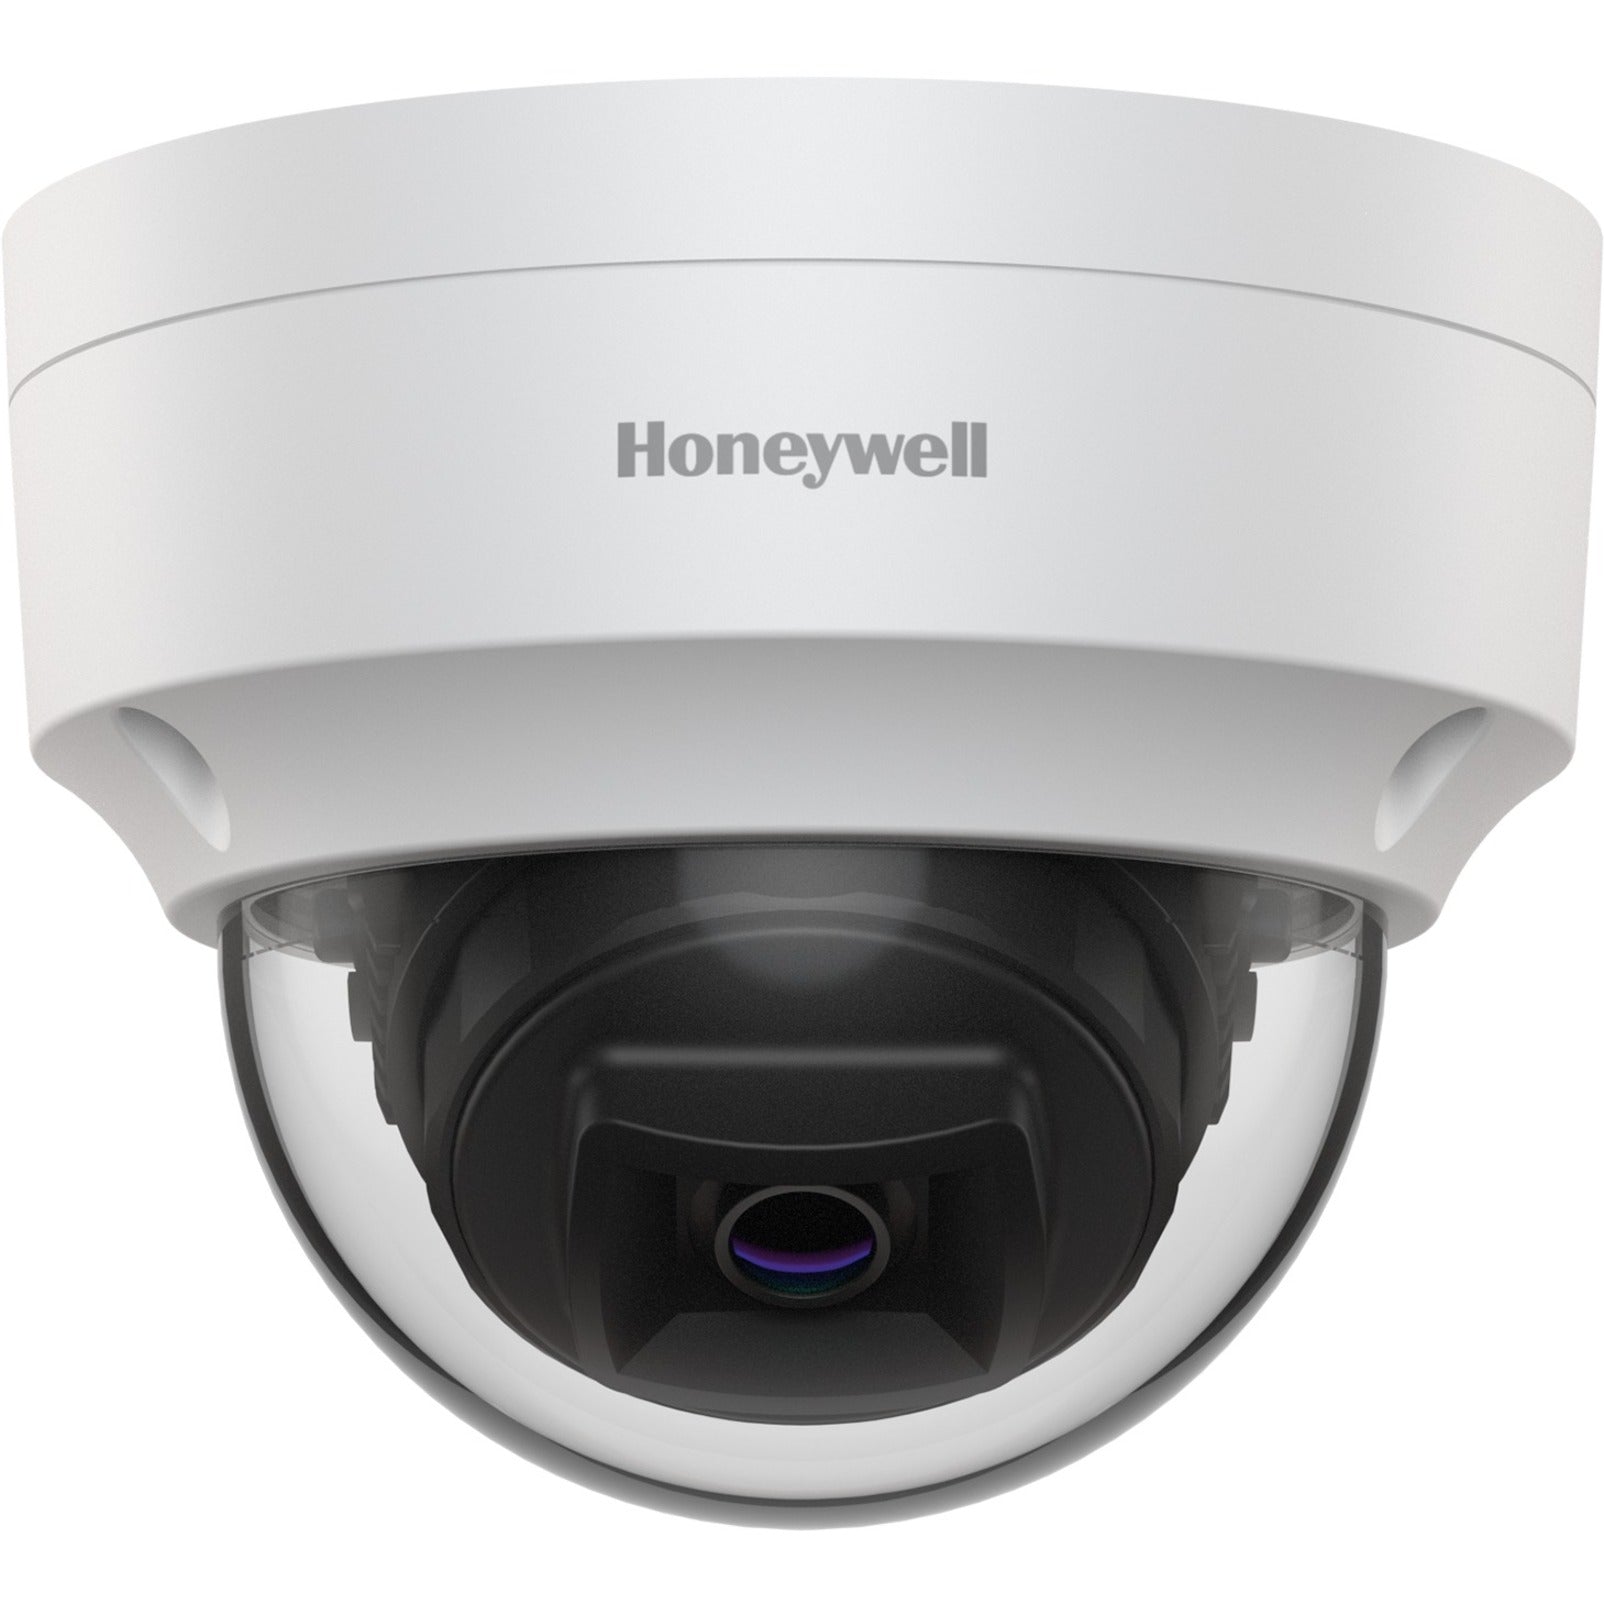 Honeywell HA30JCB01 Mounting Box for Network Camera, NDAA Compliant